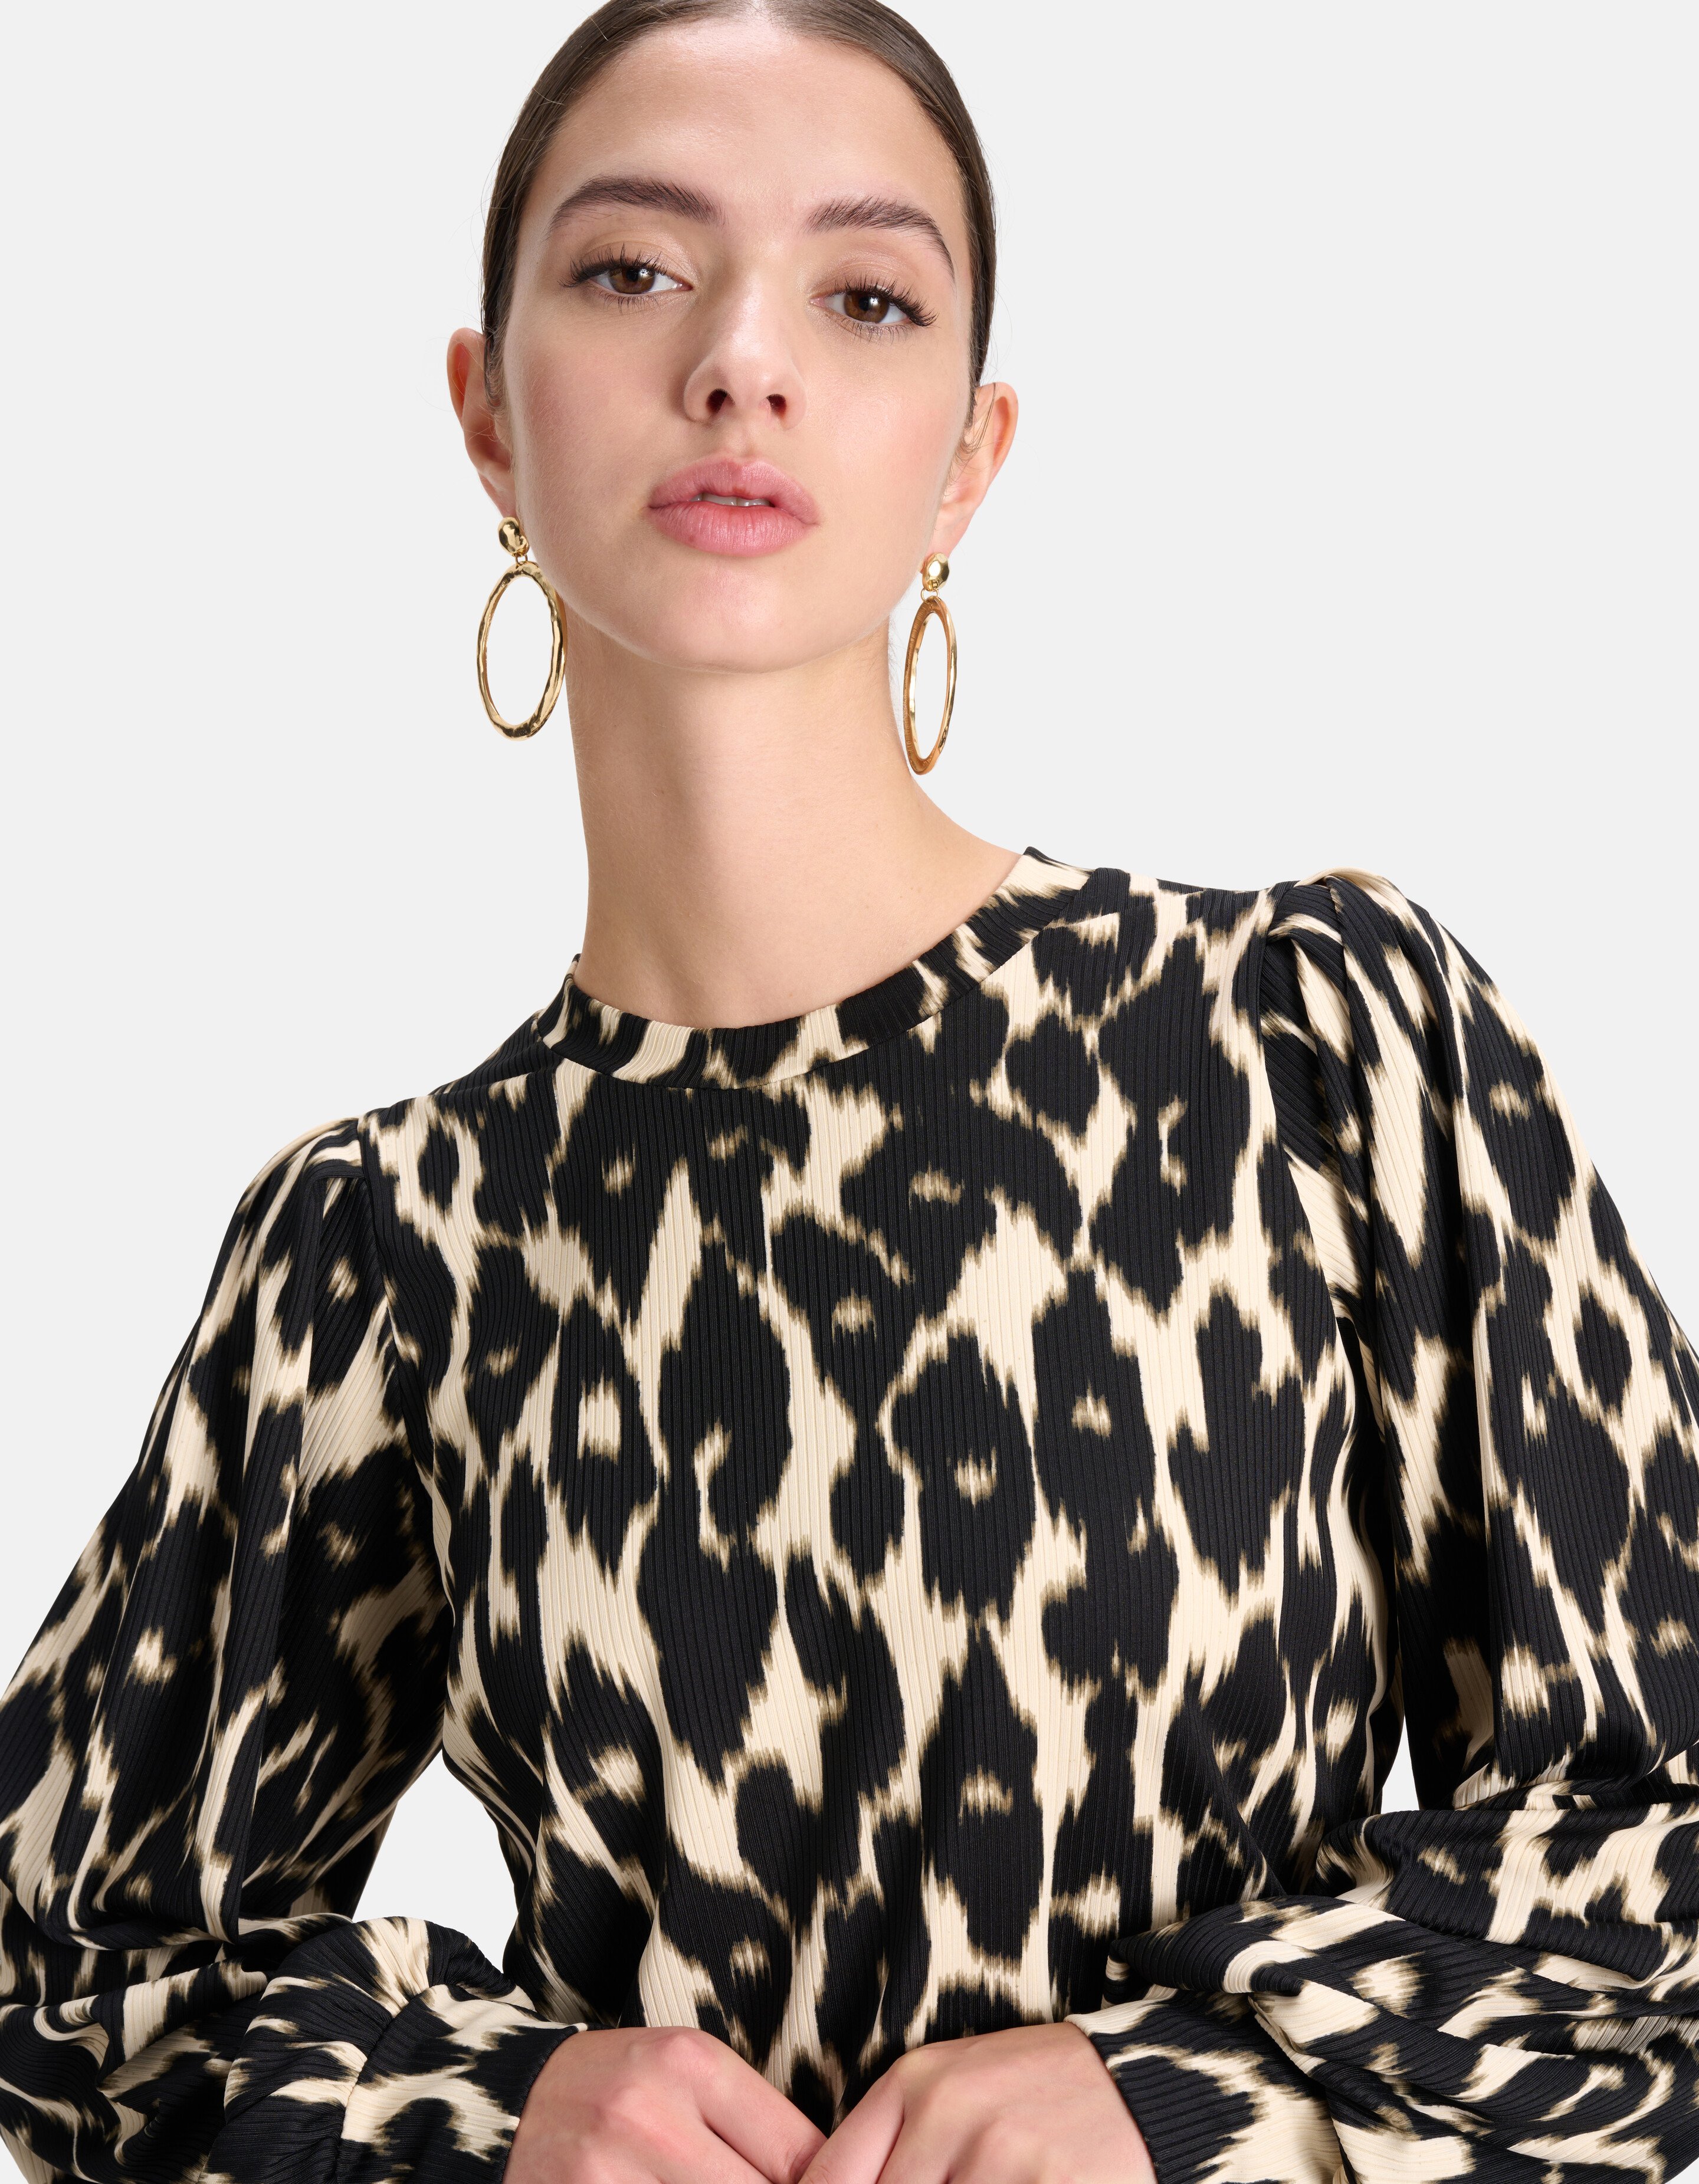 Leopard Rib T-shirt Lange Mouwen Offwhite SHOEBY WOMEN